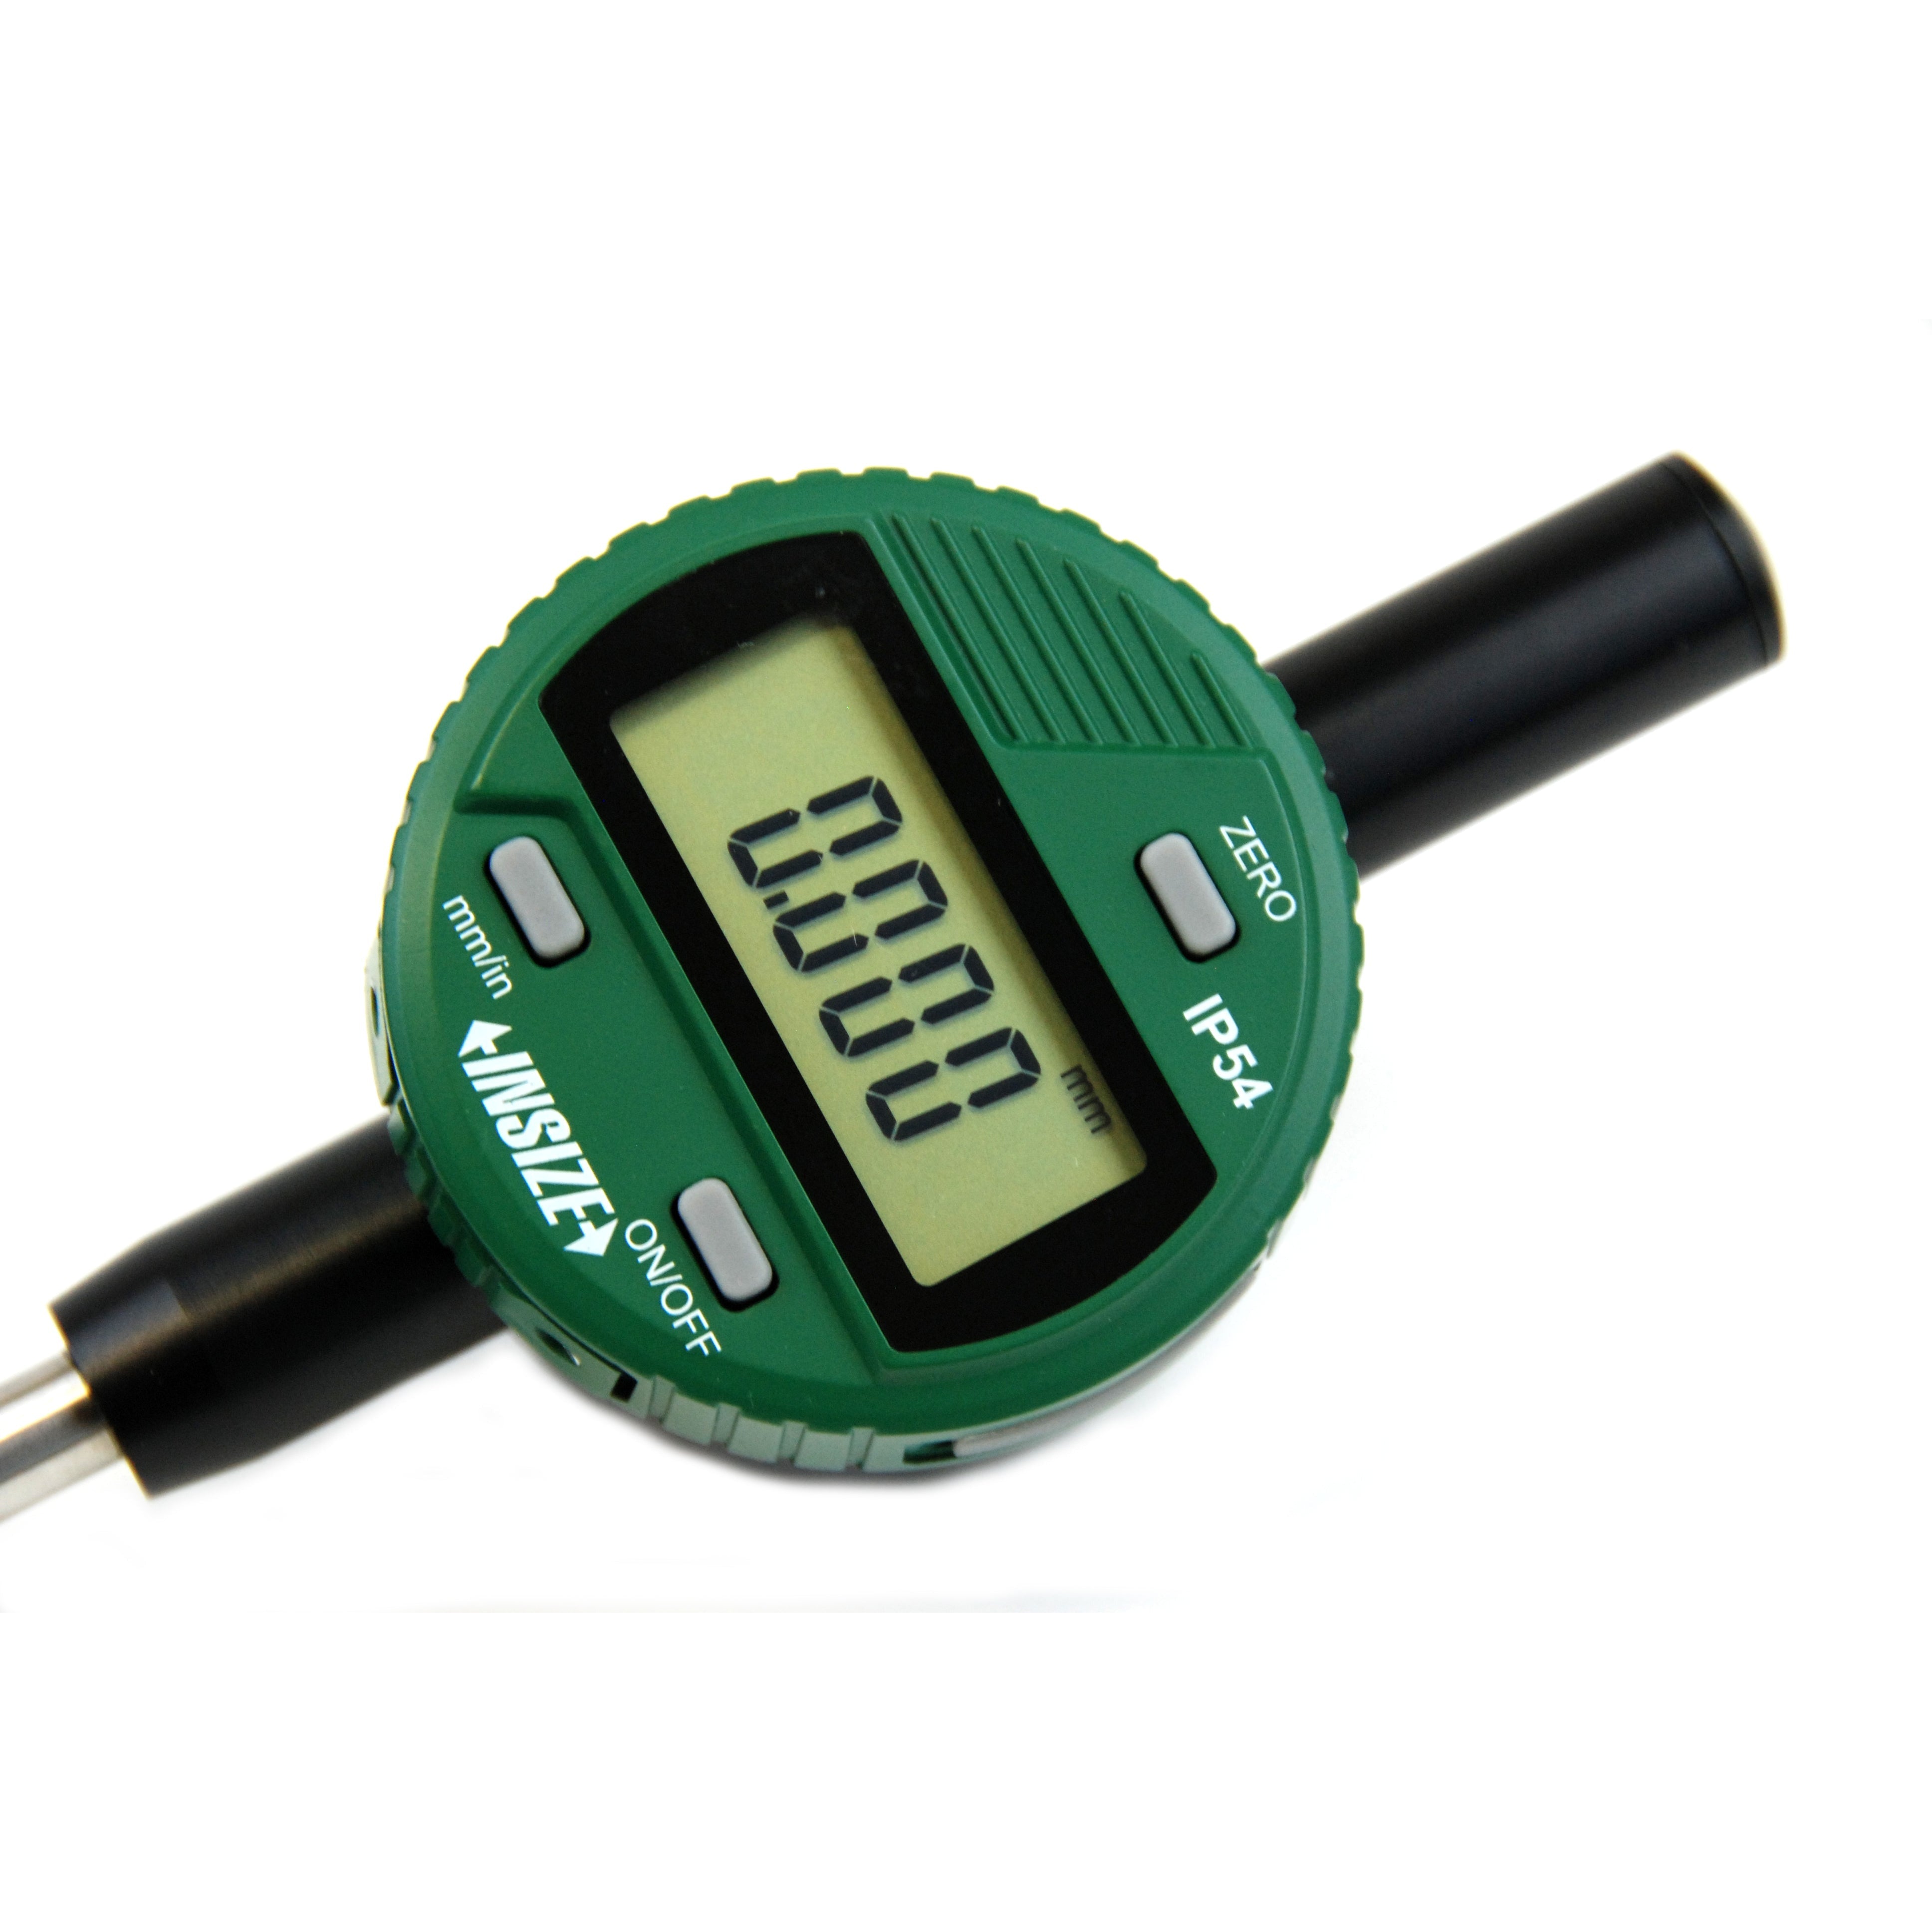 Insize Coolant Proof Digital Indicator 25.4mm / 1"  Range Series 2115-251